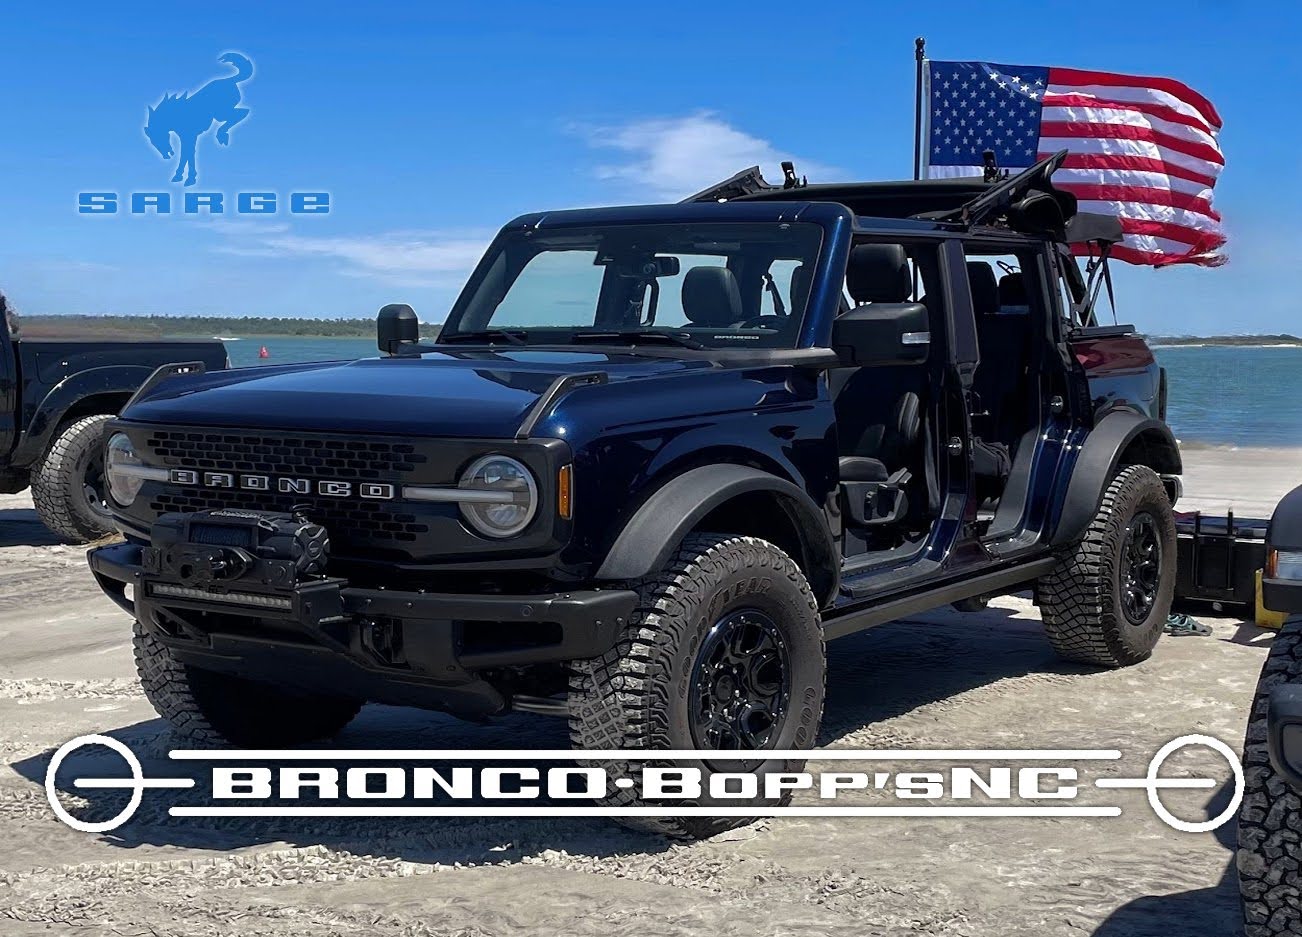 Ford Bronco High Mount Rough Country Winch 2202DB31-384A-4483-B7CE-5B0FEC3C15AE